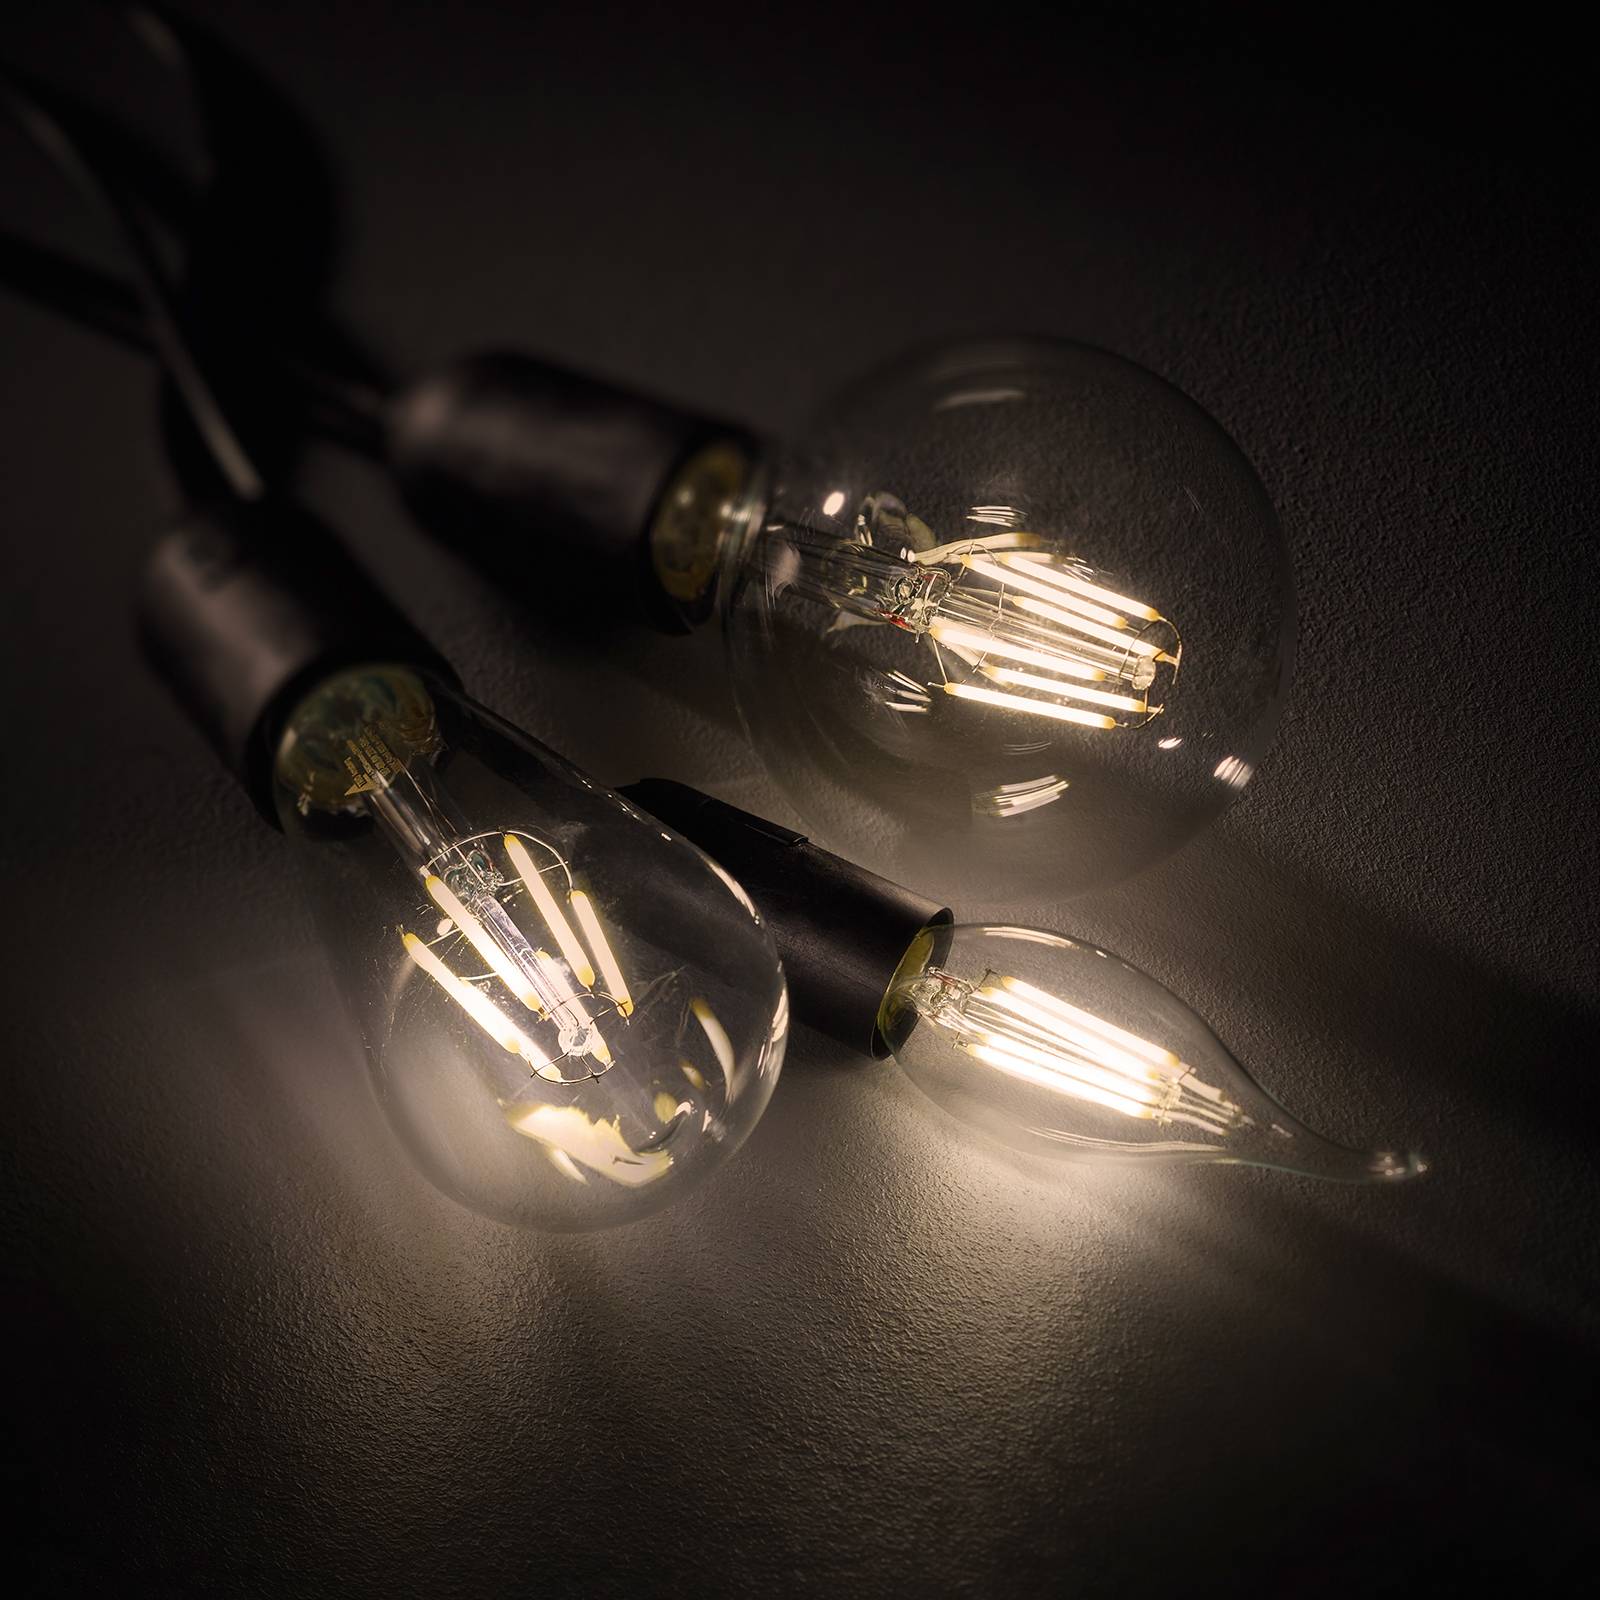 LED-Lampe E14 4W Filament, 2.700K Switch Dimmer von Trio Lighting